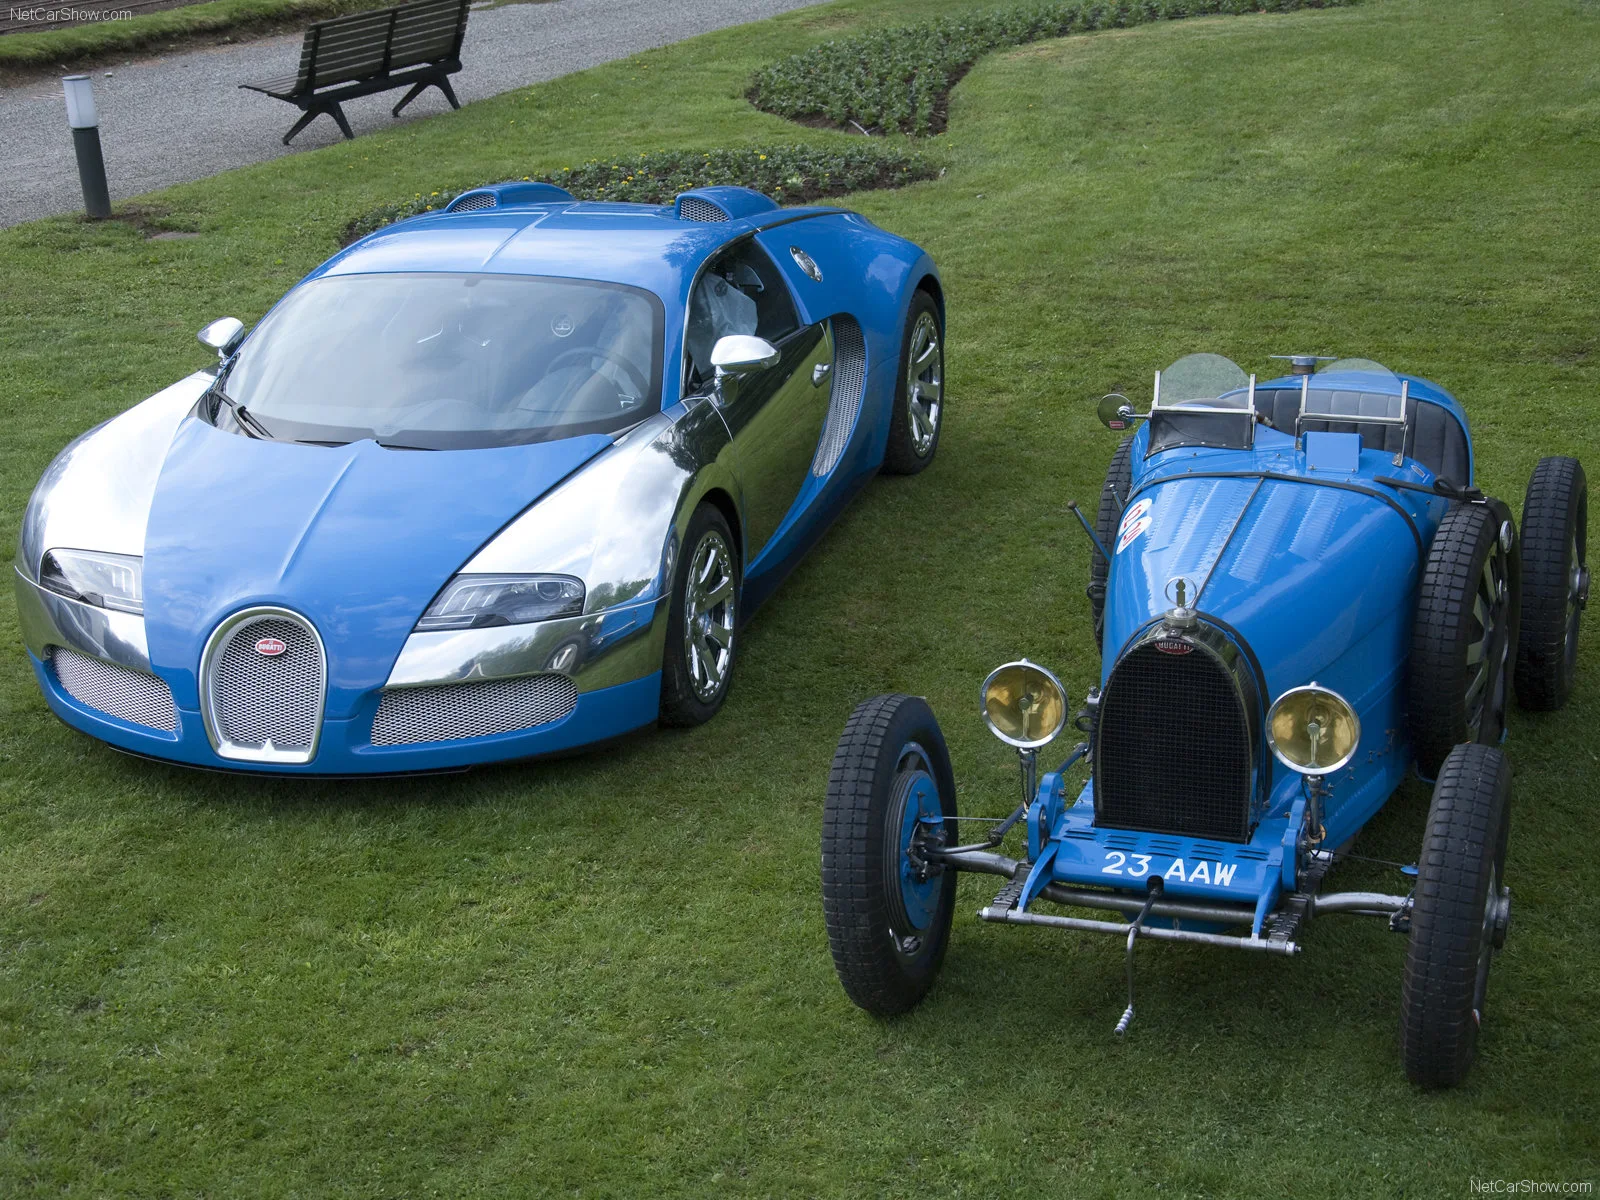 Hình ảnh siêu xe Bugatti Veyron Centenaire 2009 & nội ngoại thất